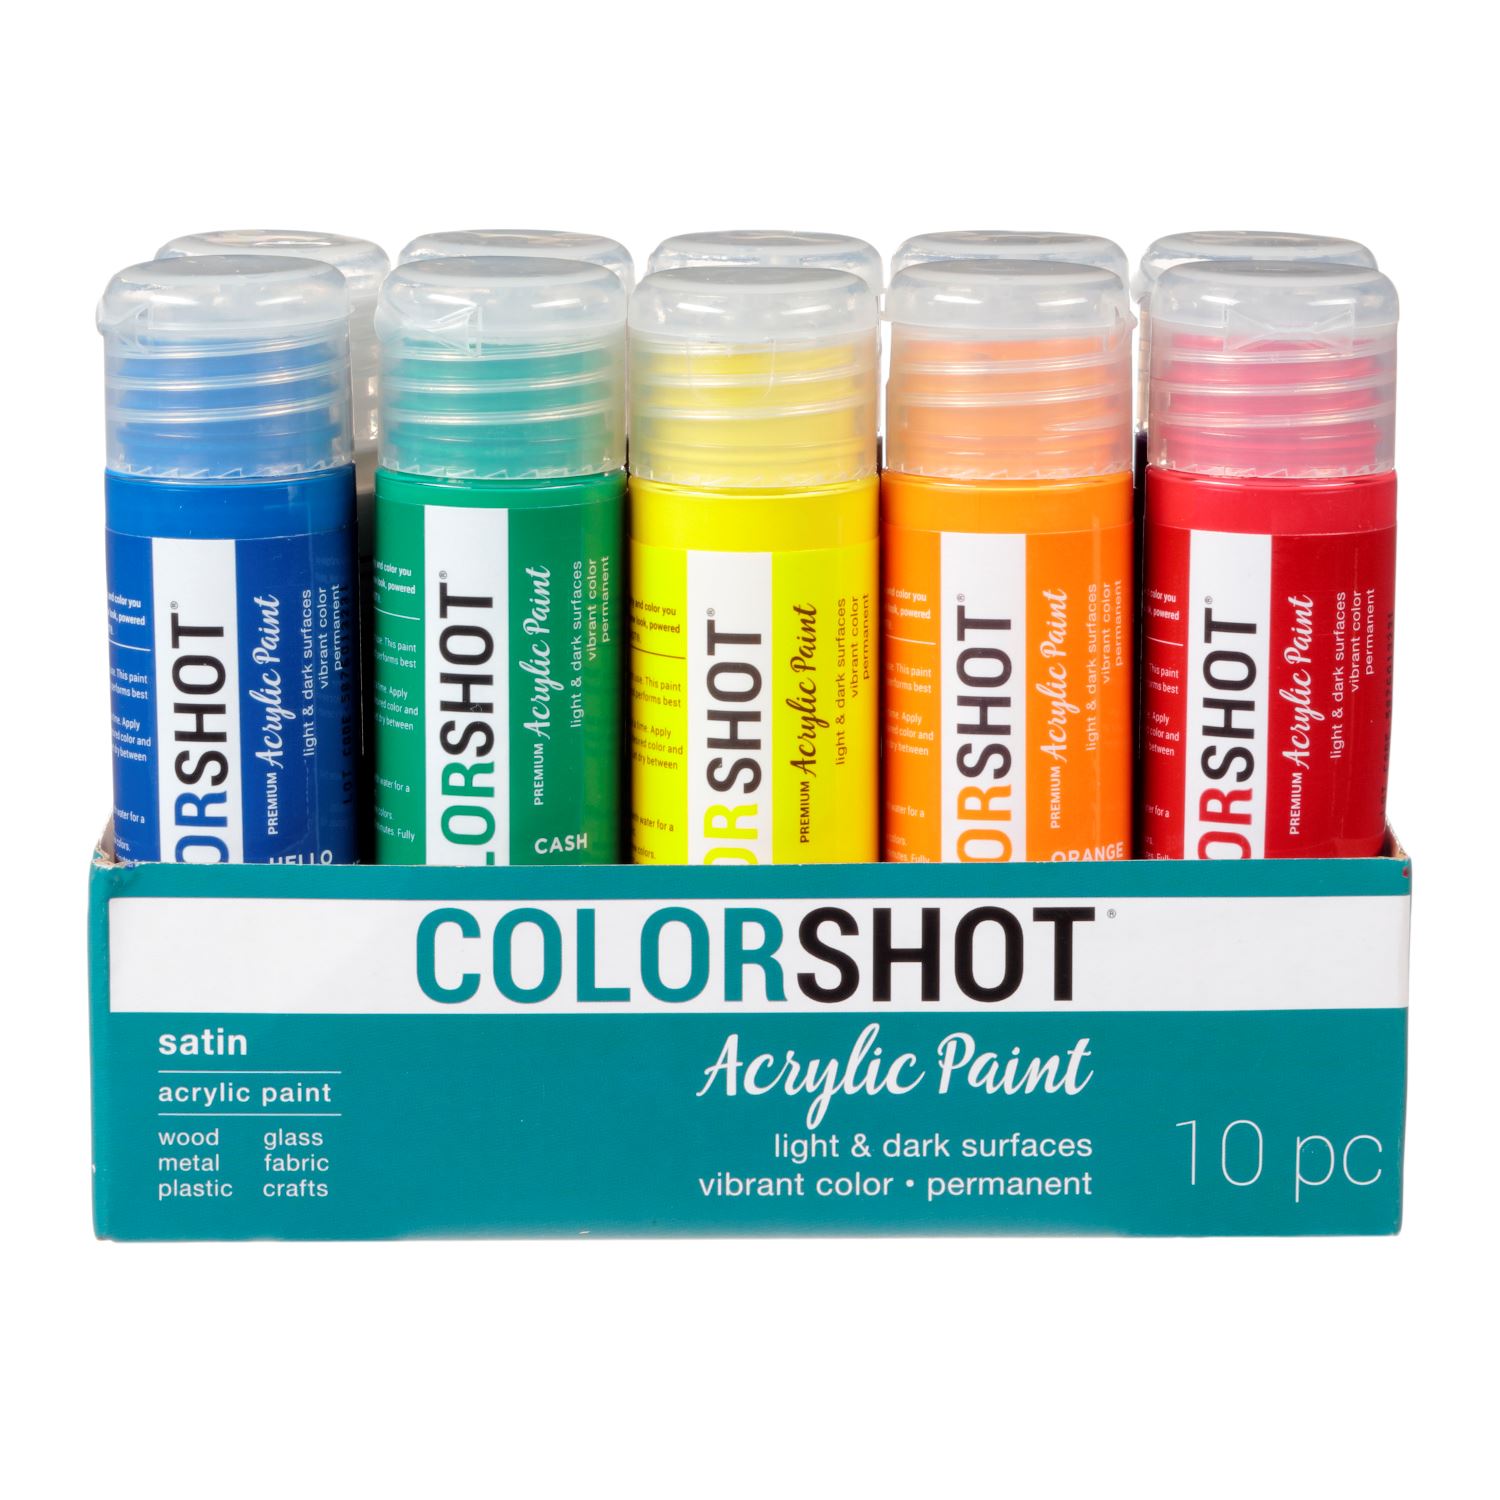 Premium Acrylic Paint Rainbow Satin 10 Pack COLORSHOT